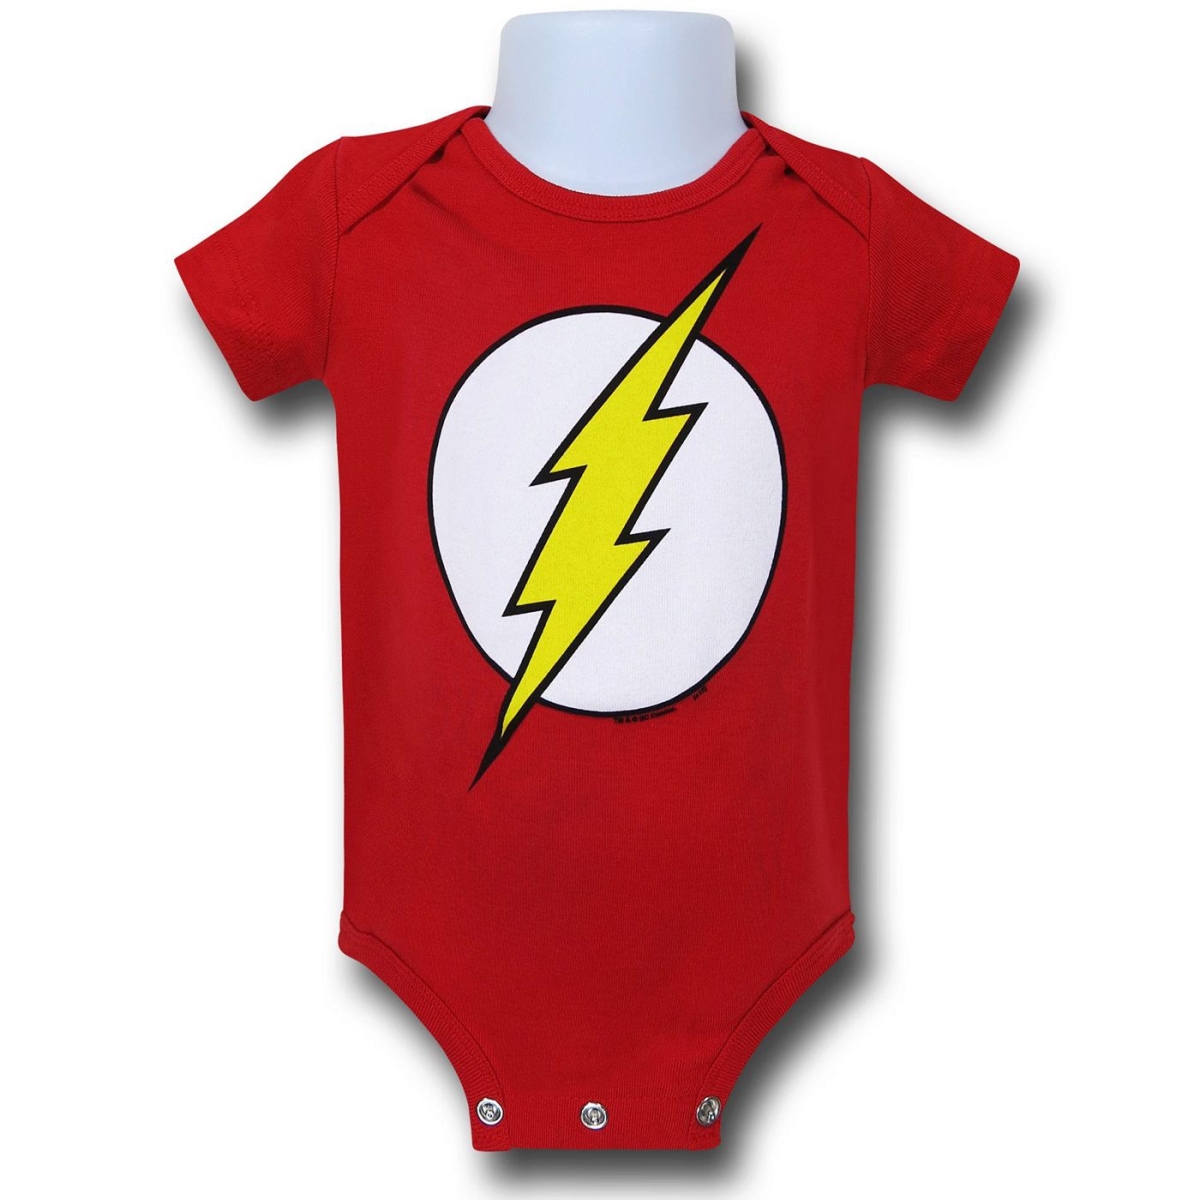 Flash Infsnapflashsym-18-24-18-24 Months Flash Symbol Infant Snapsuit - 18-24 Months